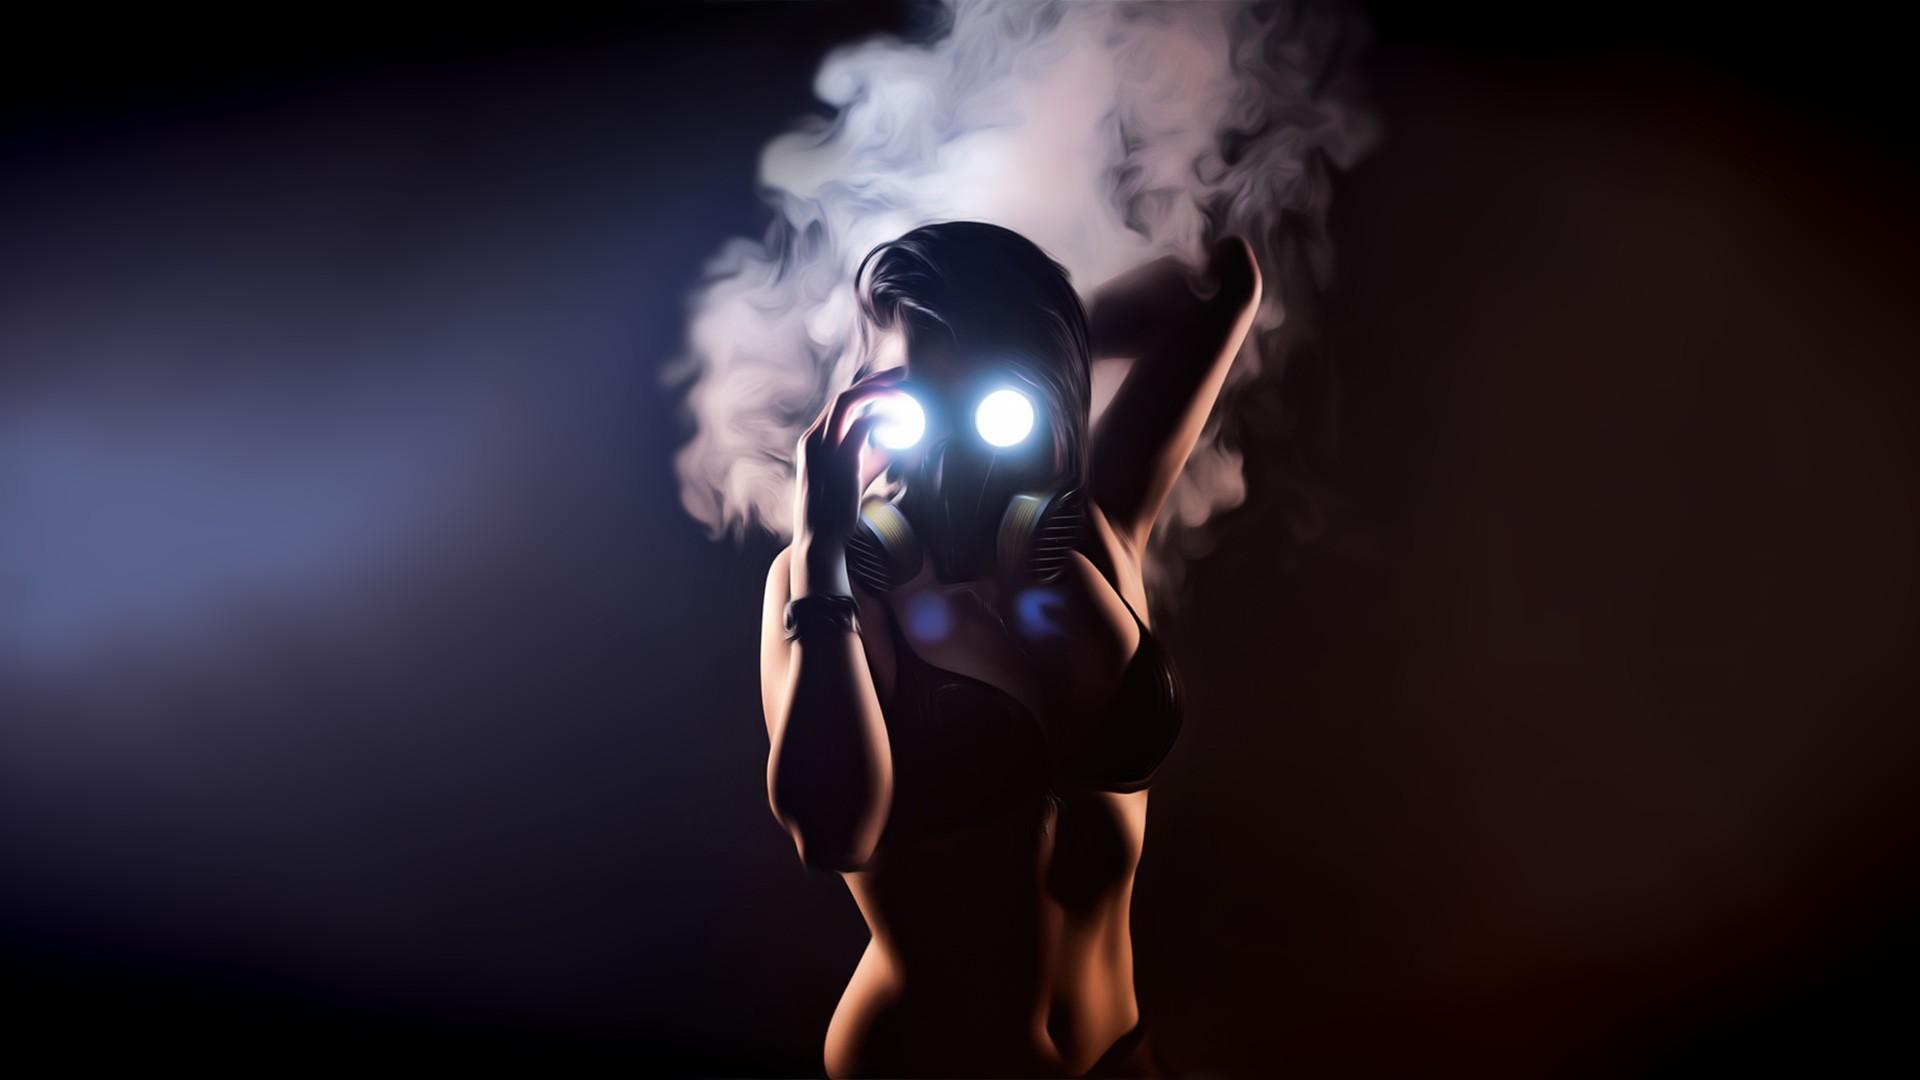 Wallpaper, women, model, gas masks, photography, glowing, smoke